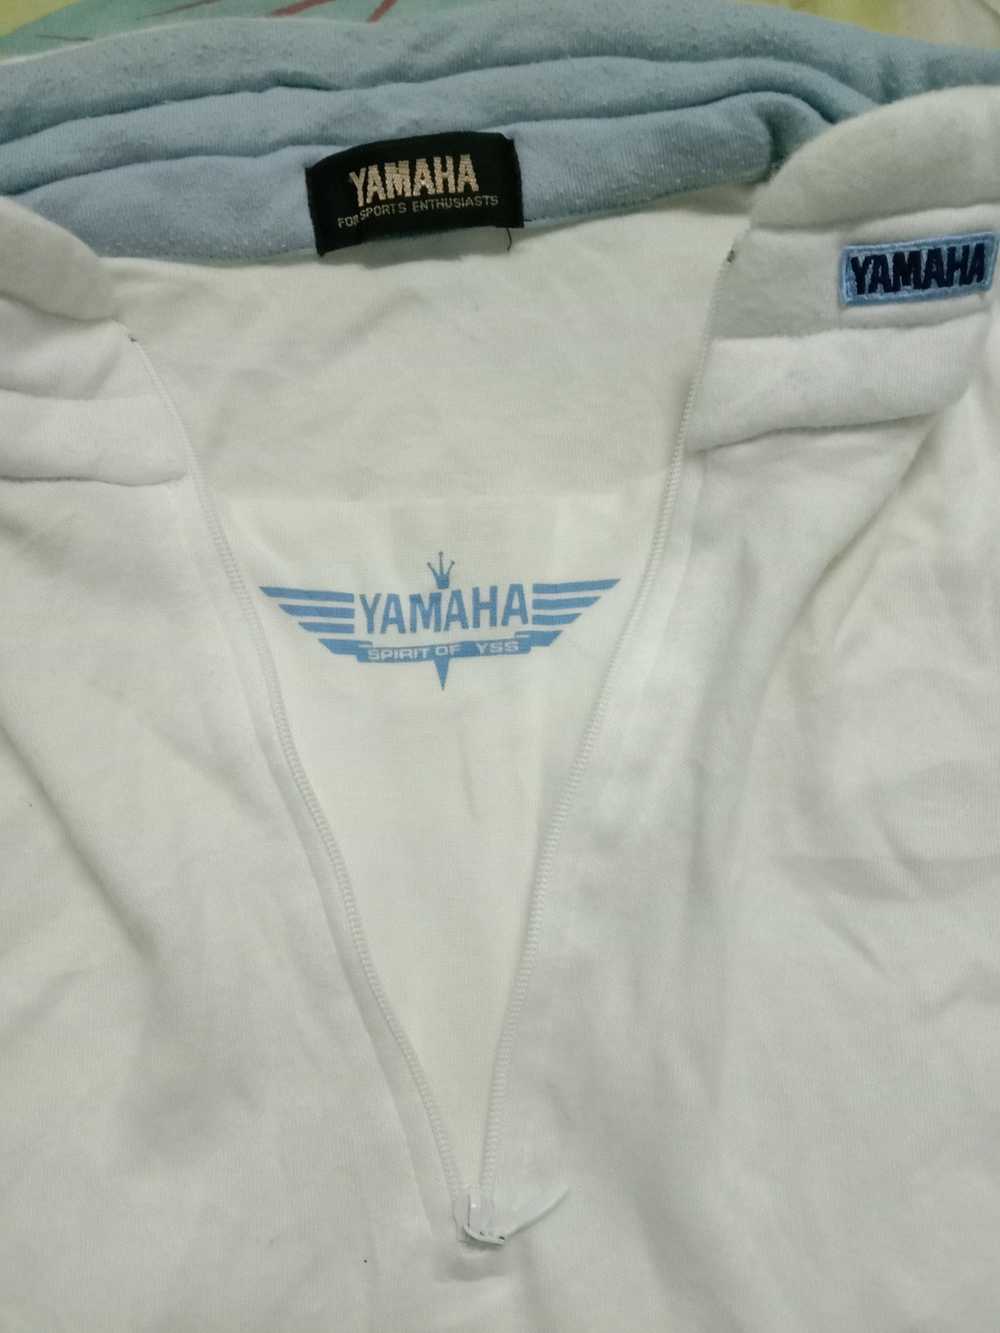 All Sport × Racing × Yamaha Yamaha knitwear shirt - image 12